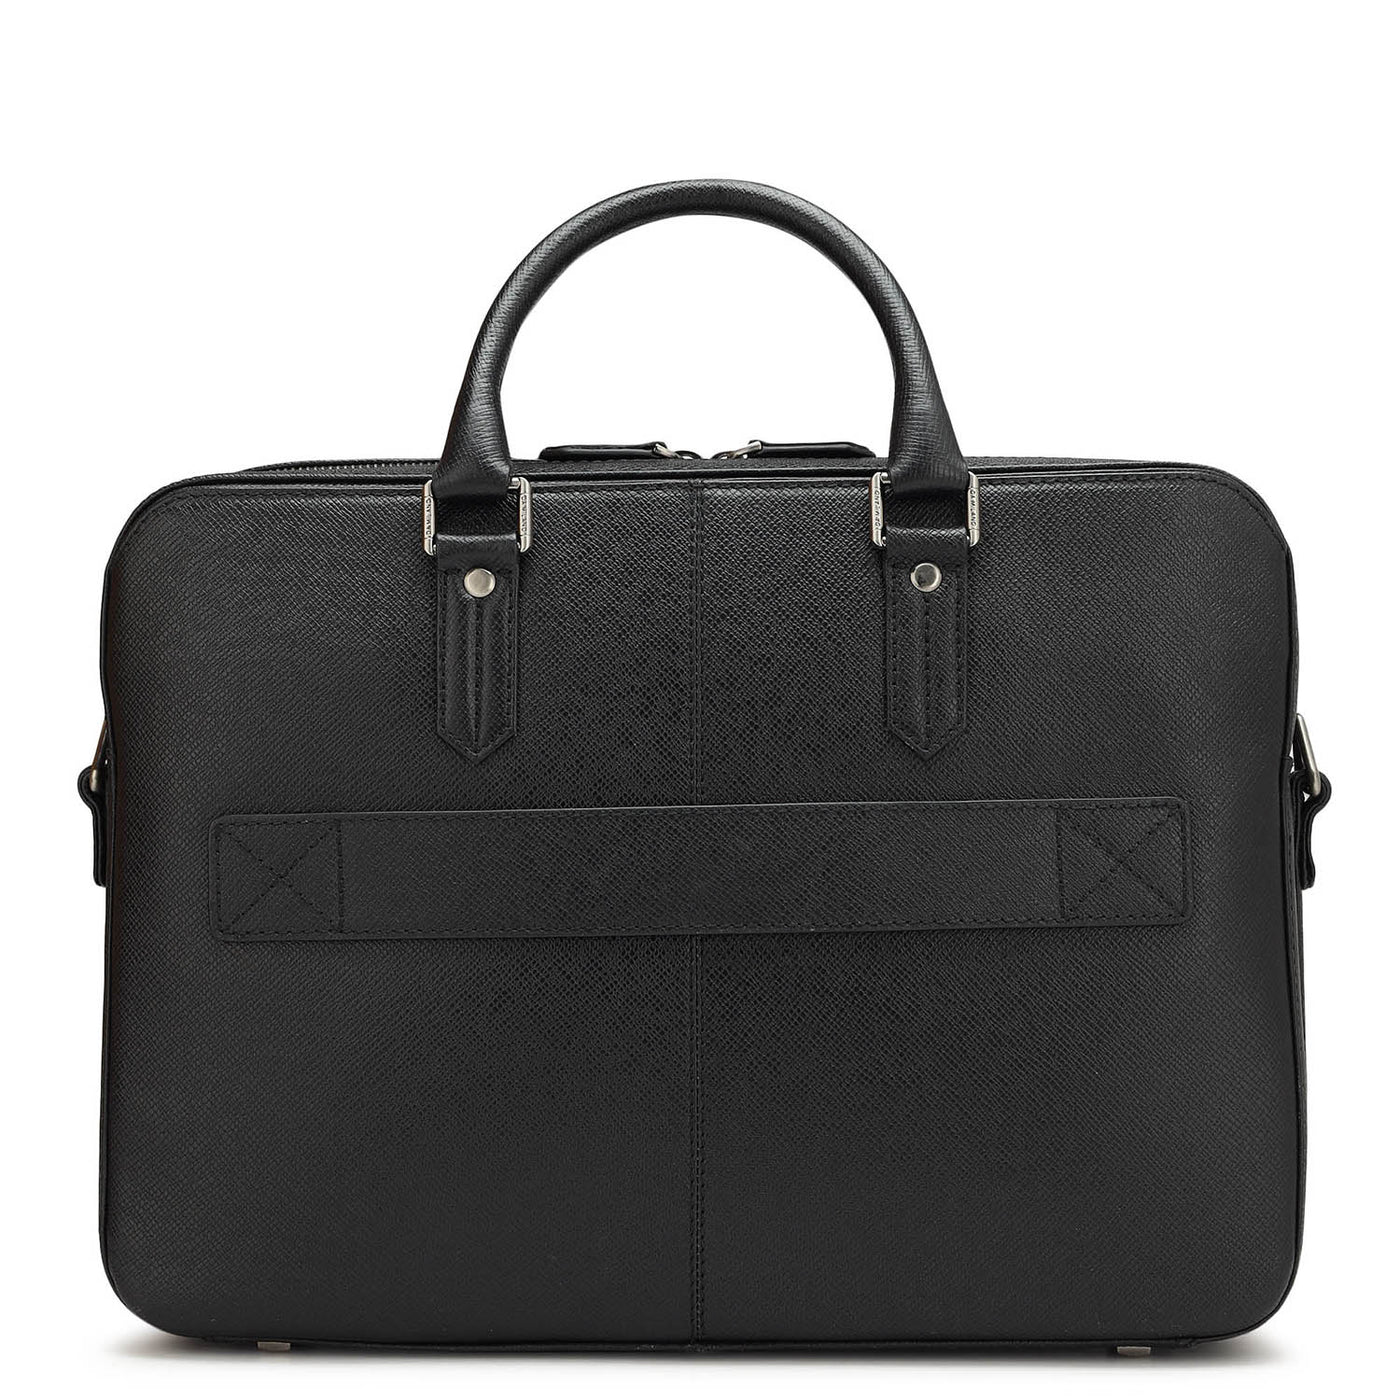 Black Franzy Leather Laptop Bag - Upto 15"